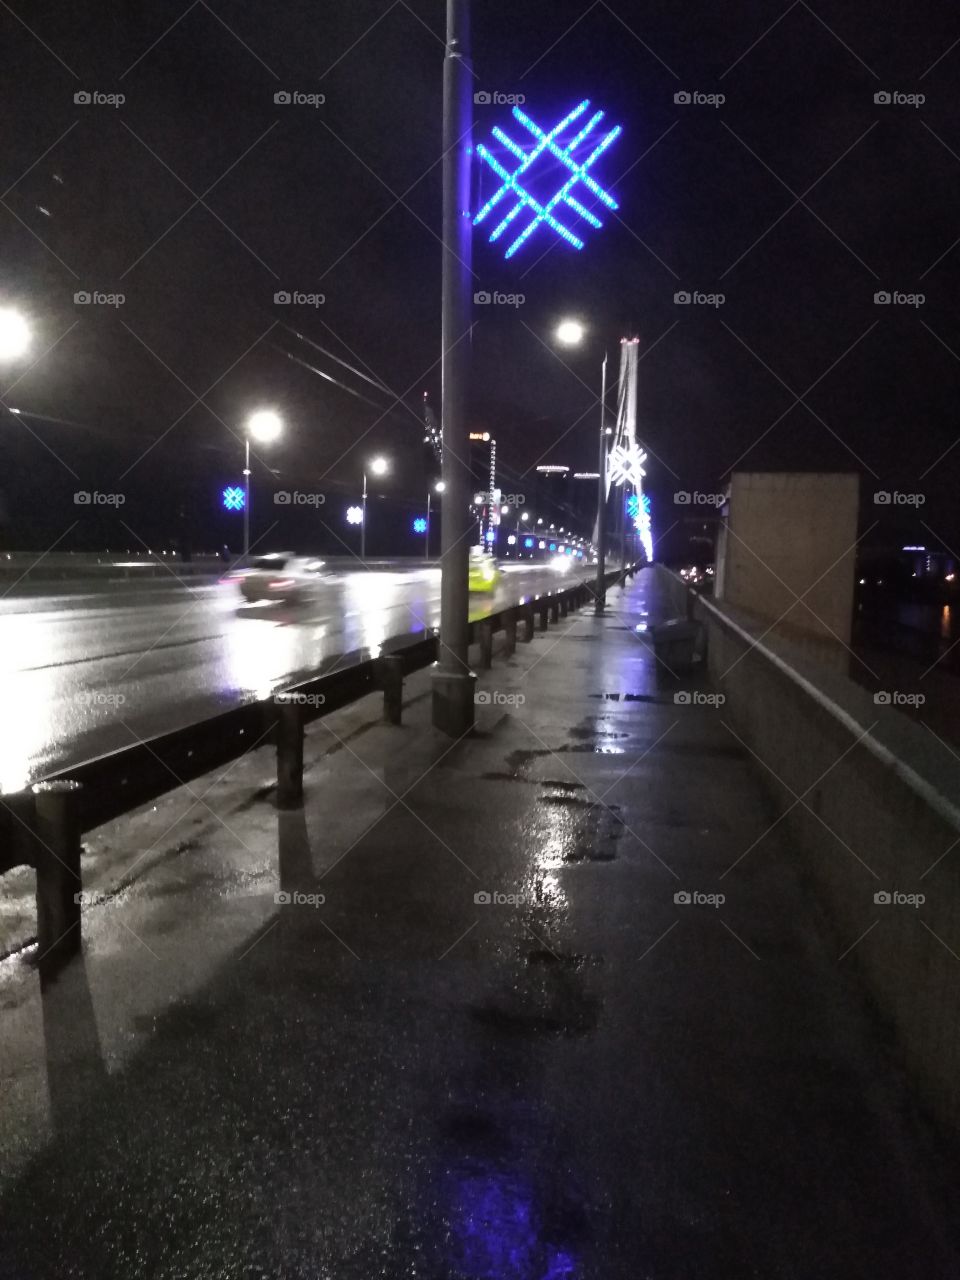 The bridge at night.